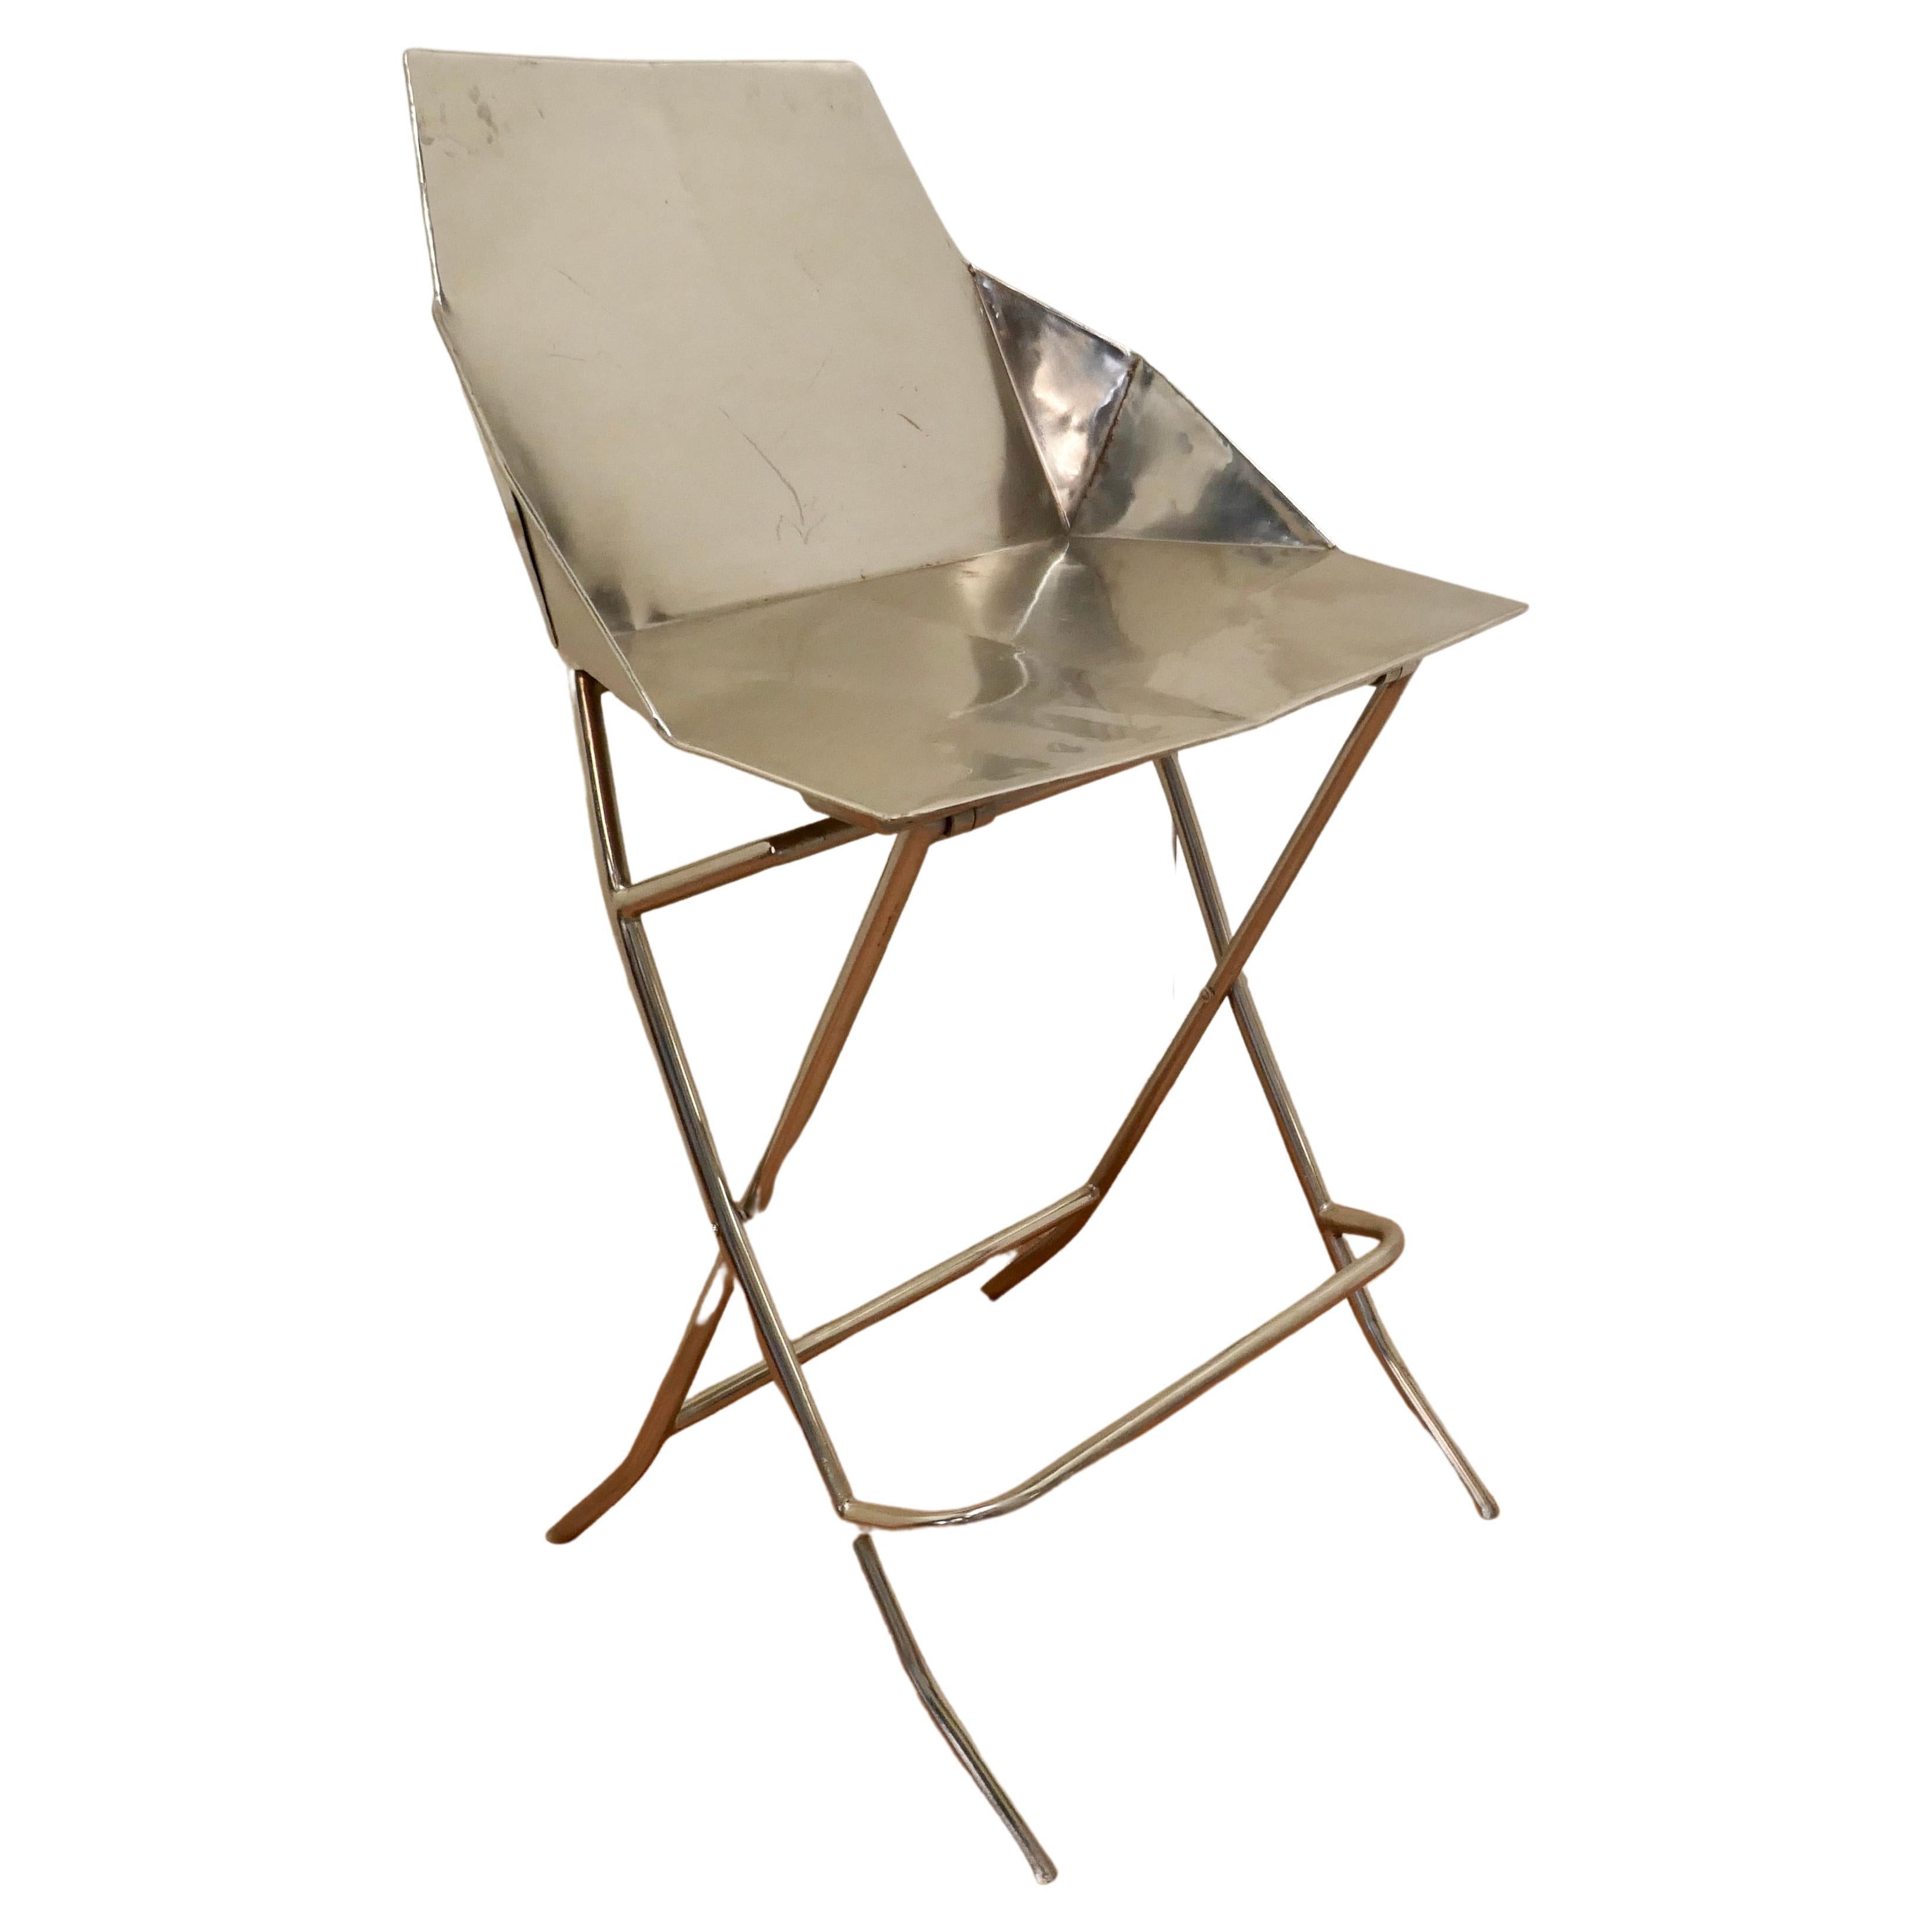 Unusual Steel Adjustable Designer Chair